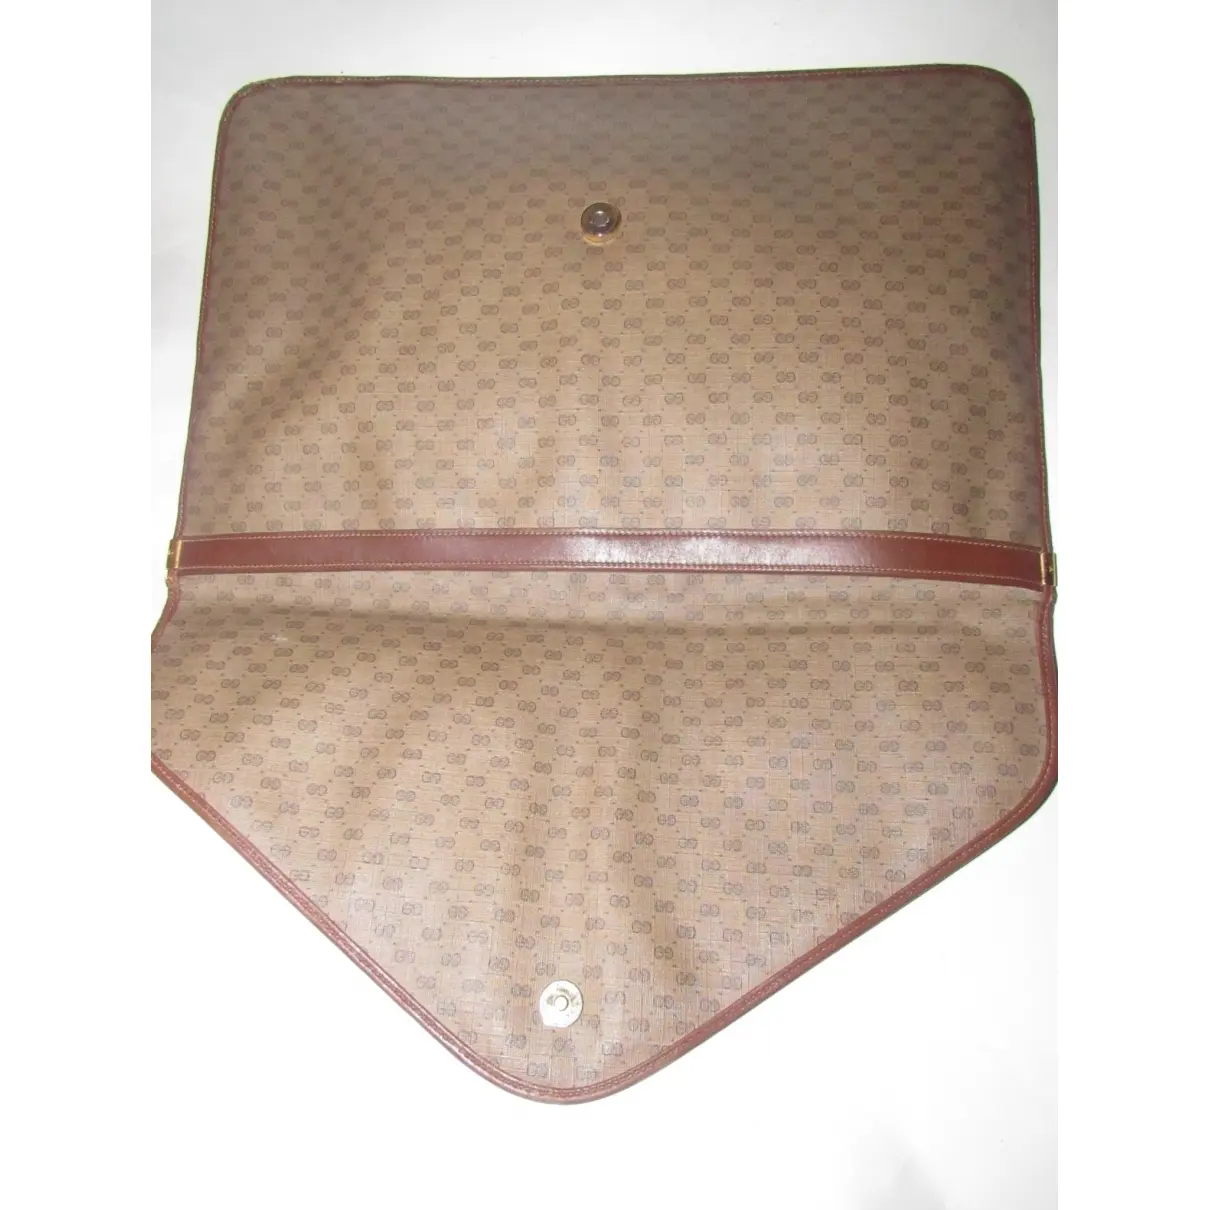 Buy Gucci Joy leather clutch bag online - Vintage